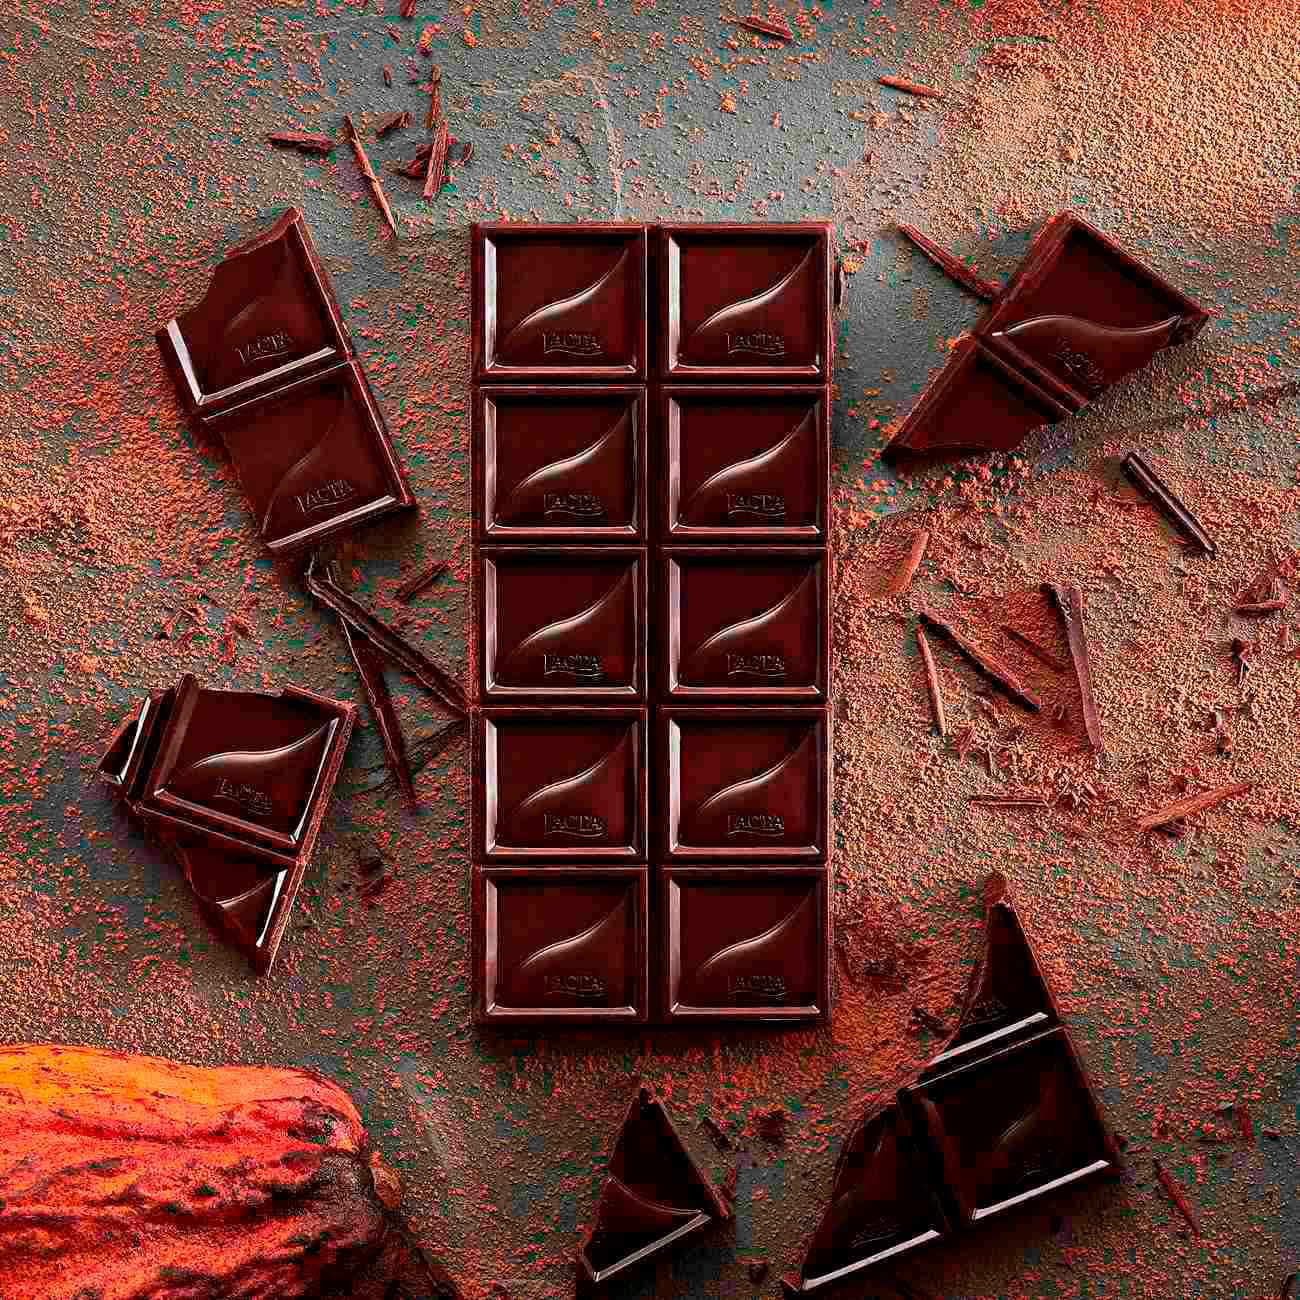 Barra de Chocolate Lacta Intense 40% Cacau Original 85g | Display 17 unidades